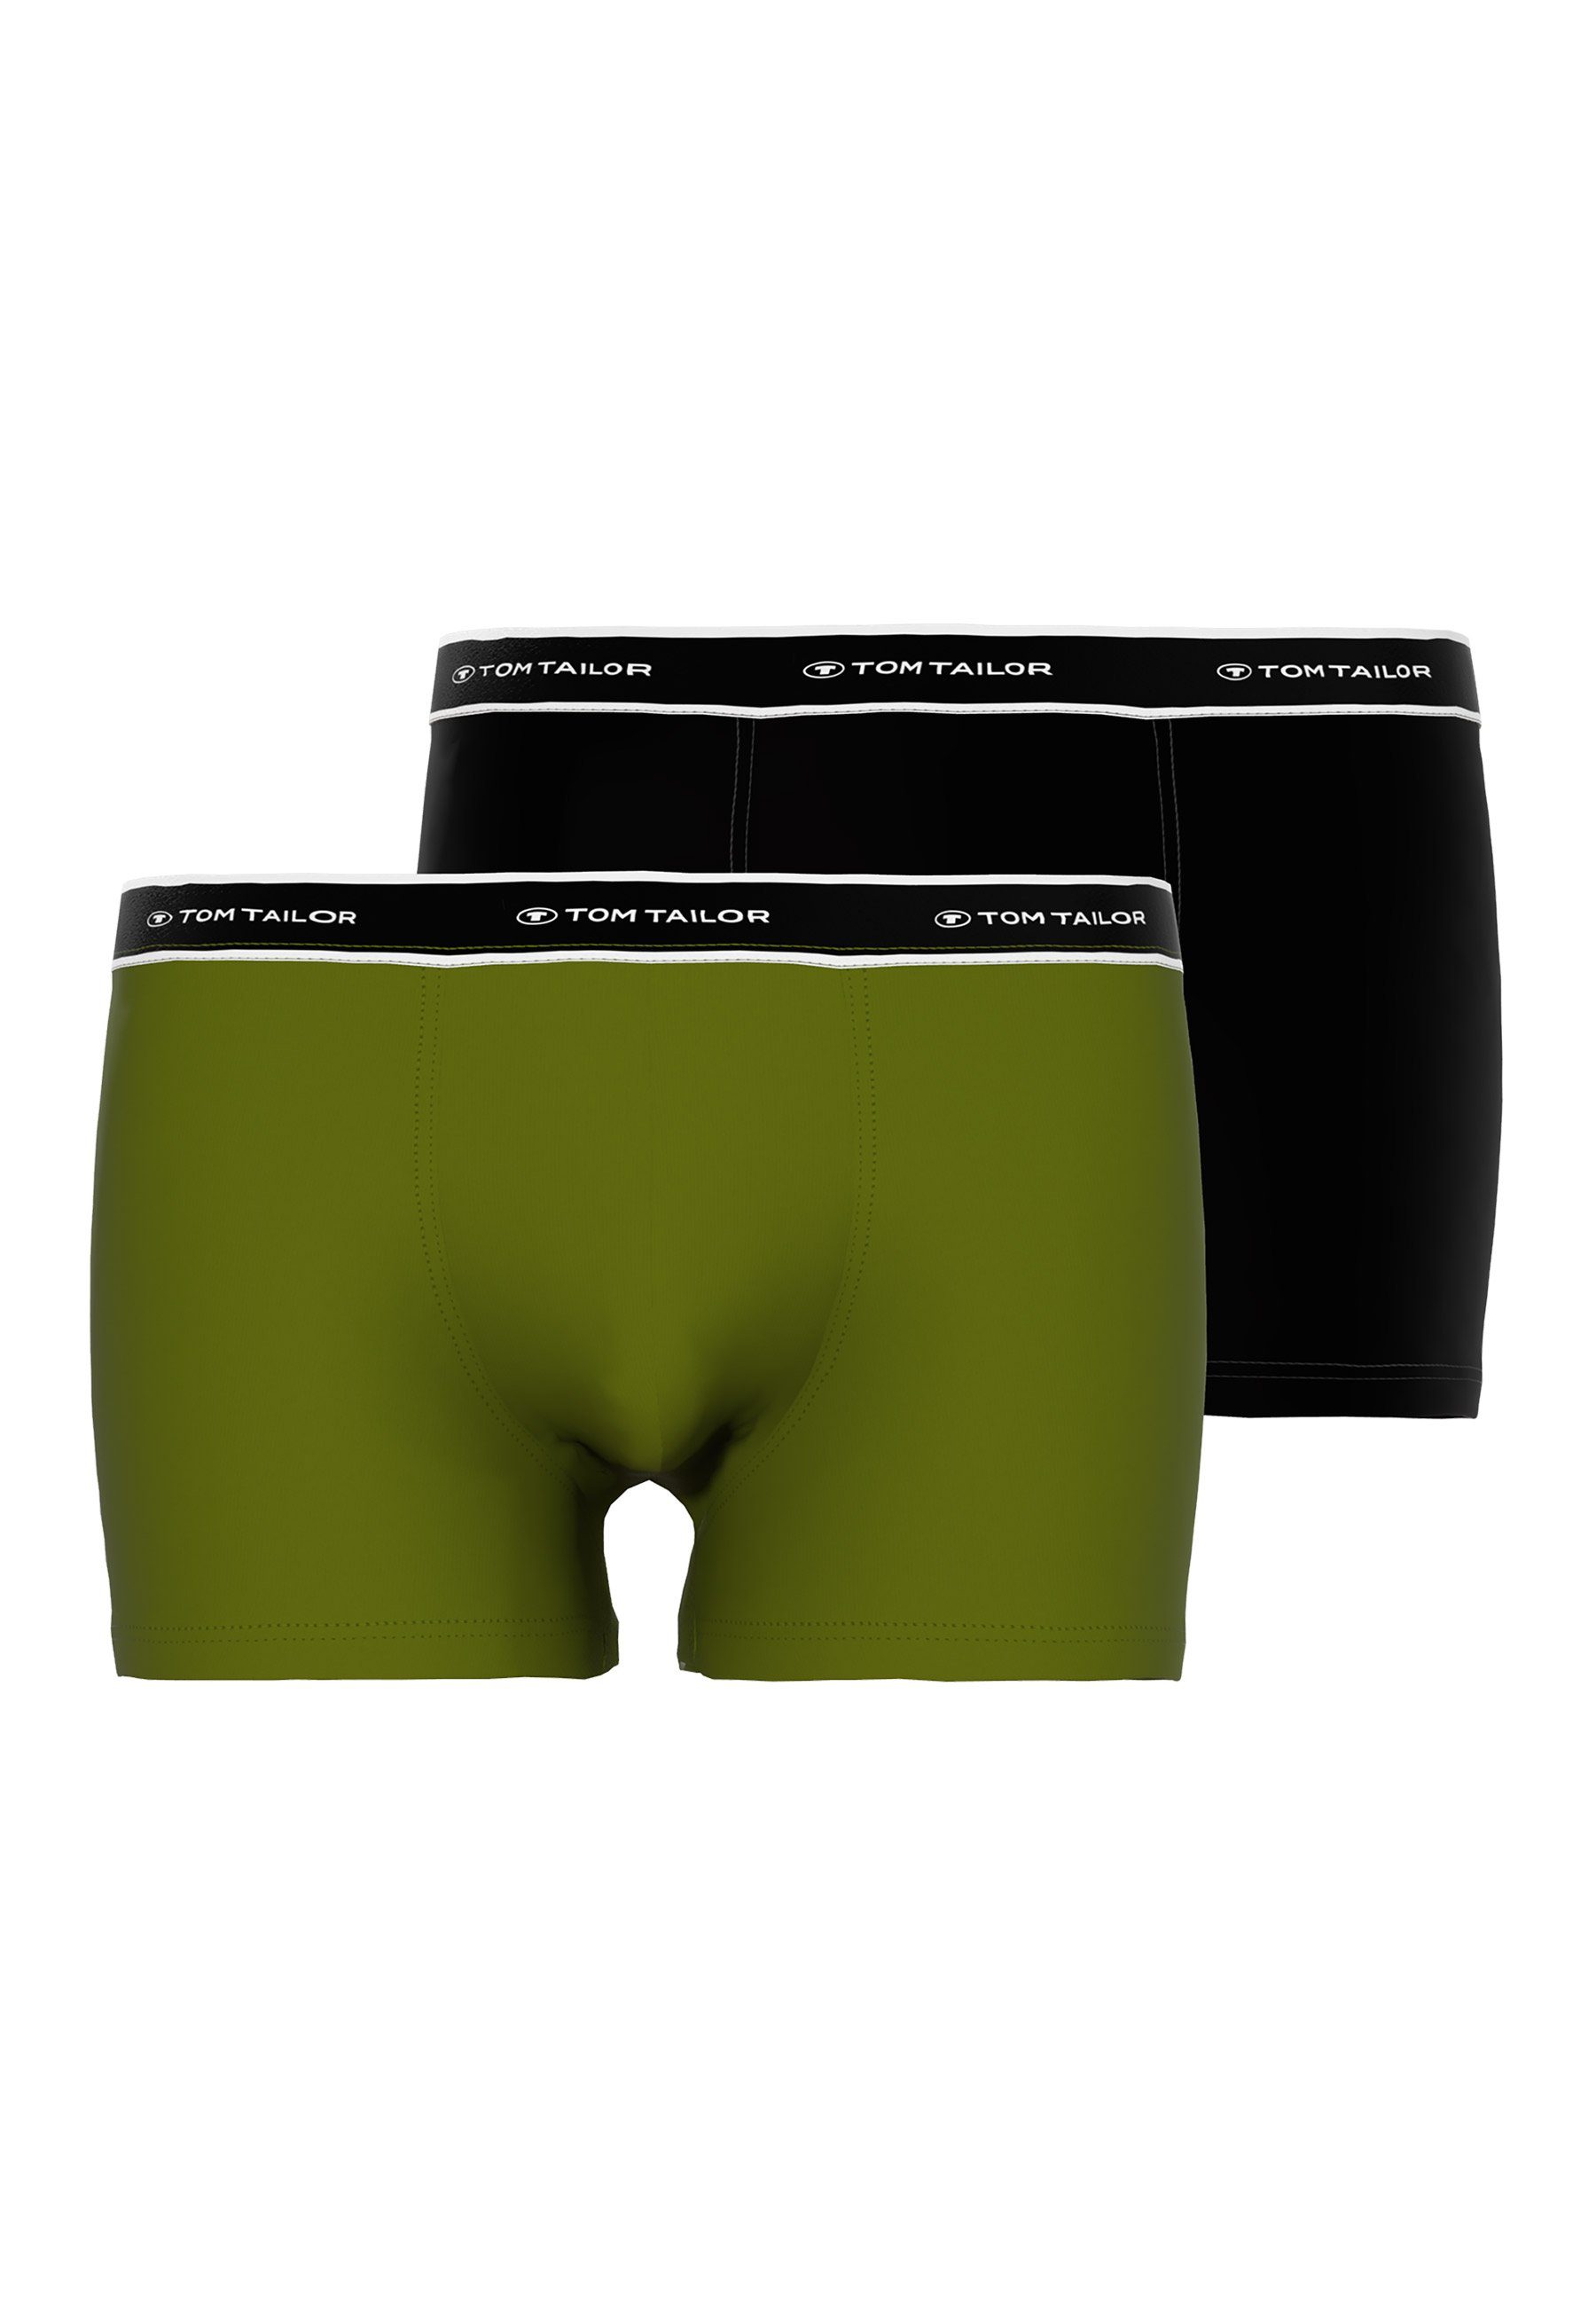 TOM TAILOR Boxershorts TOM TAILOR Herren Hip Pants grün uni 2er Pack (2-St) grün-dunkel-uni